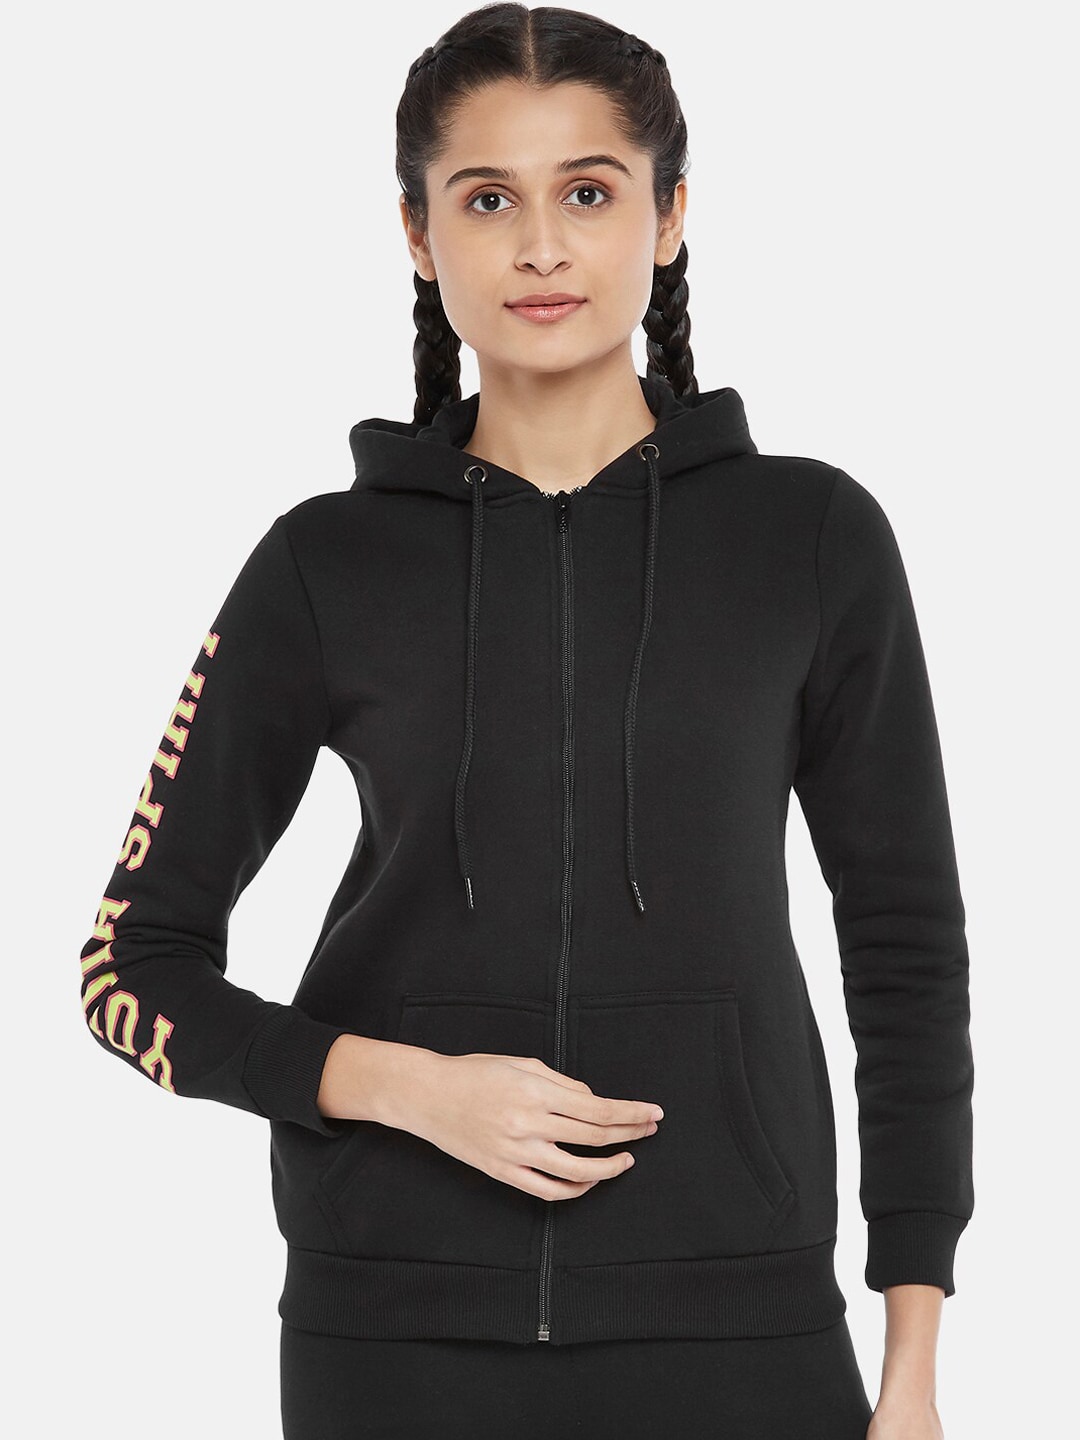 Ajile by Pantaloons Women Black Solid Sweatshirt Price in India